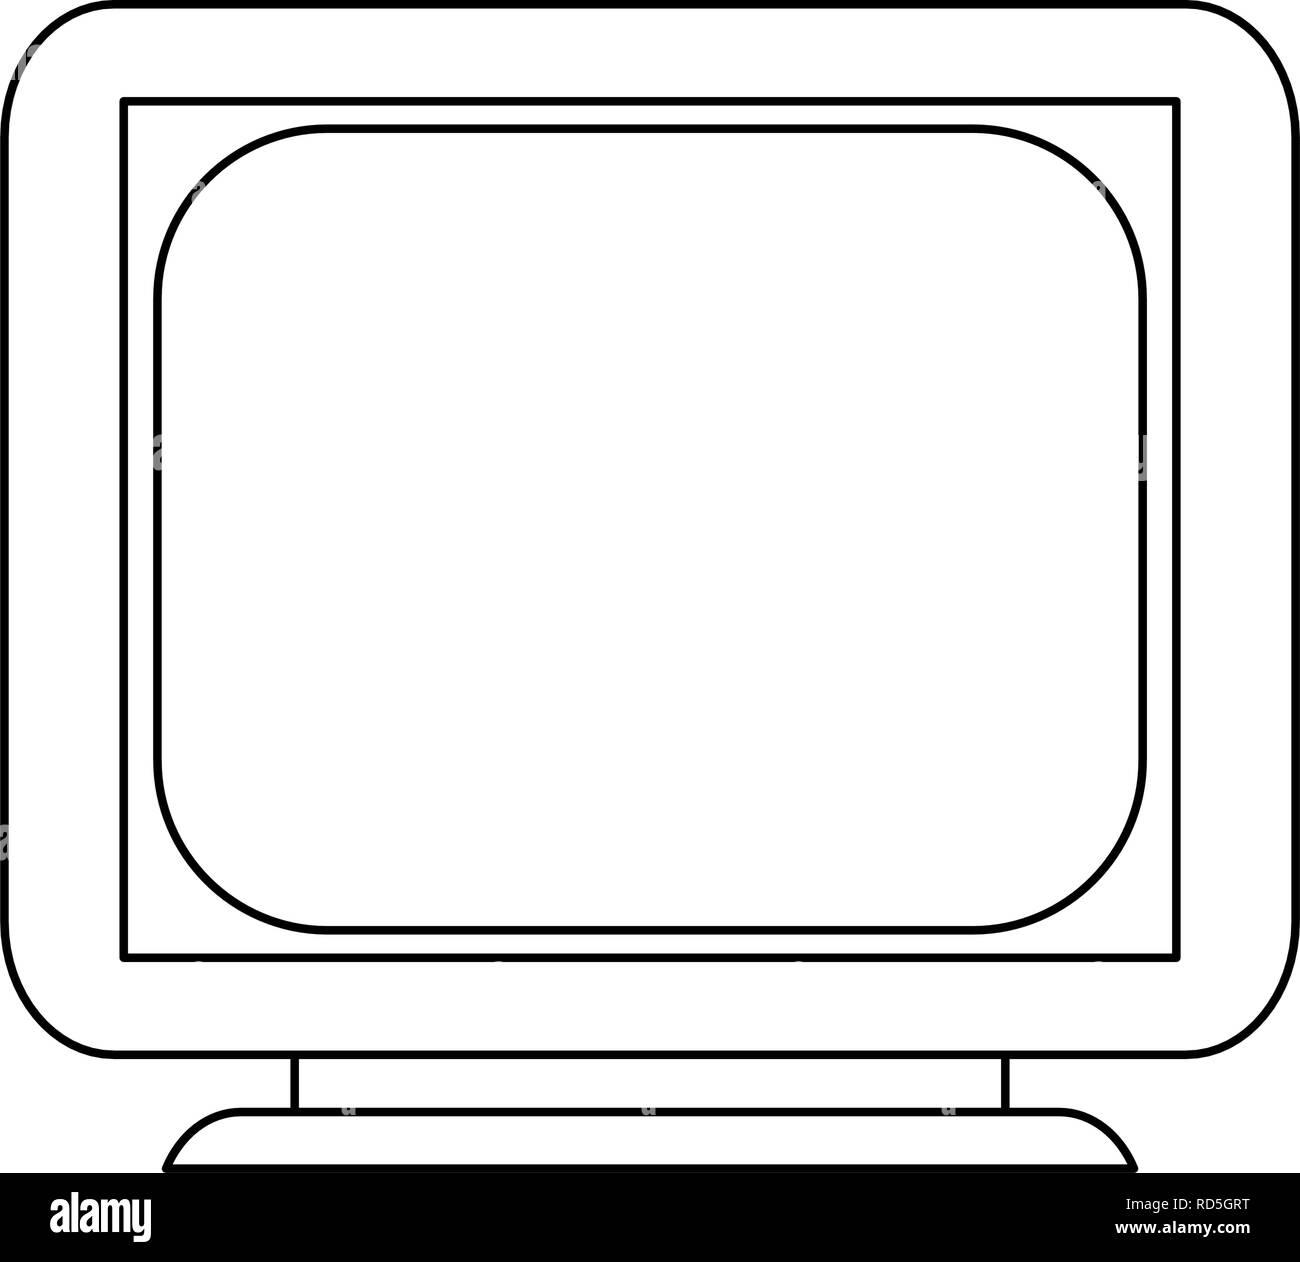 Alte TV-Gerät design Hintergrund Vector Illustration Stock Vektor